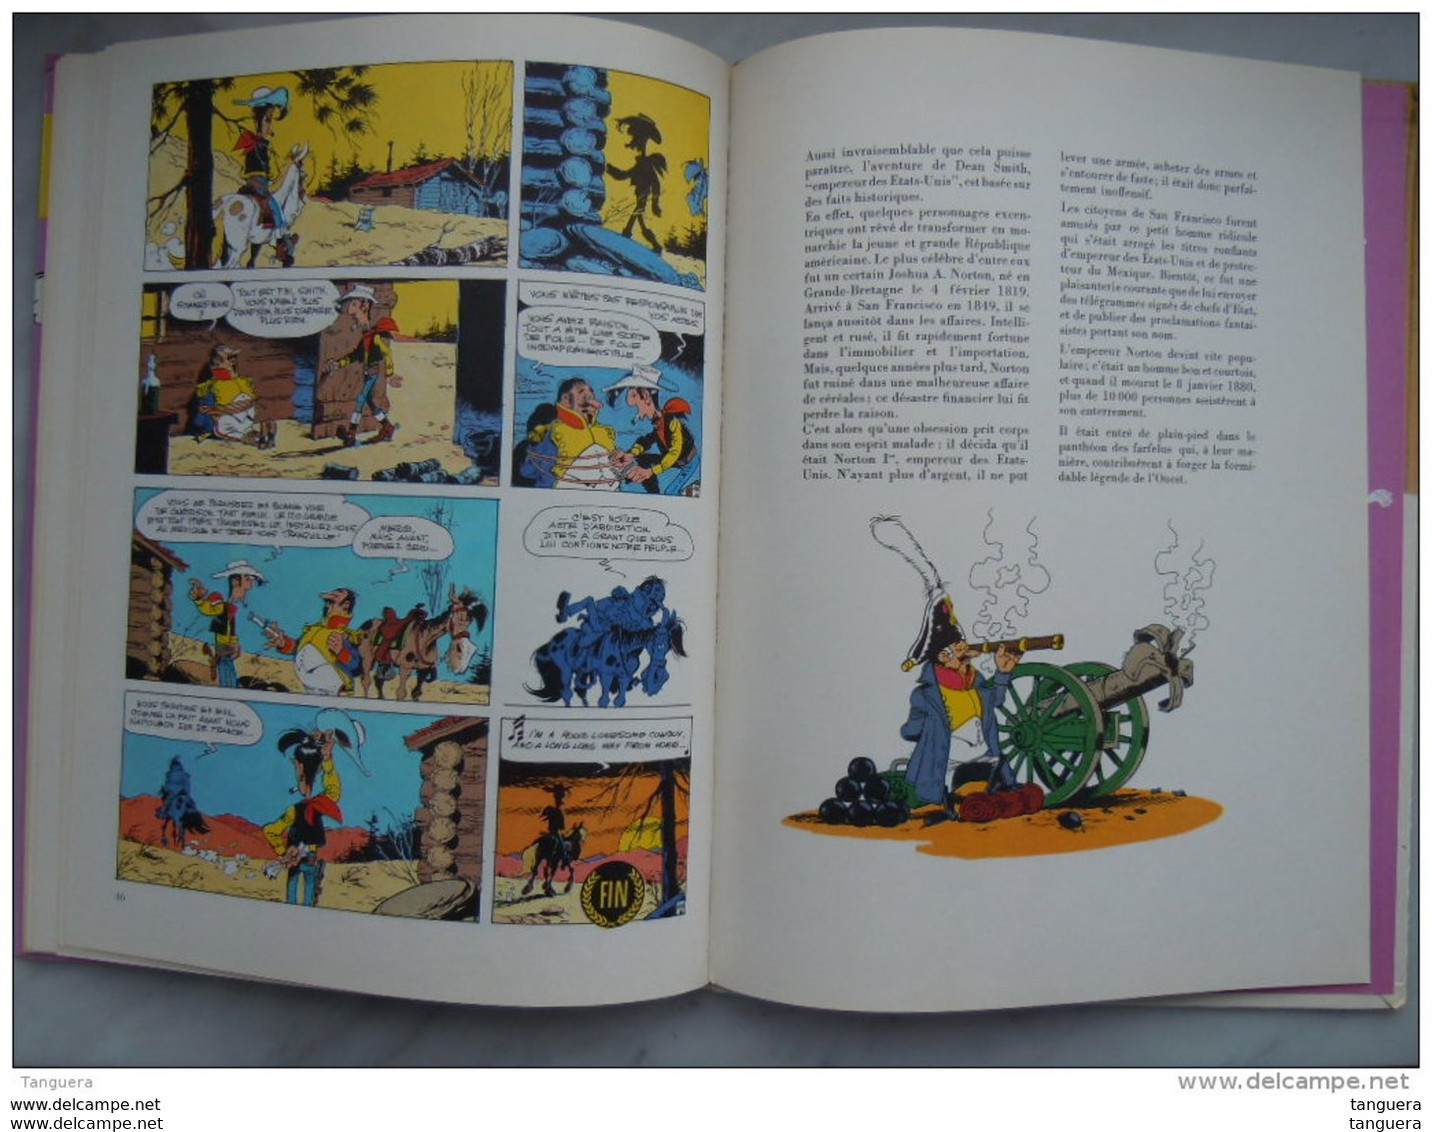 Lucky Luke L'Empéreur Smith 1er édition Dargaud Dépot Légal 2e Trim. 1976 ISBN 2-205-00906-0 Tres Bon état Hard Cover - Erstausgaben